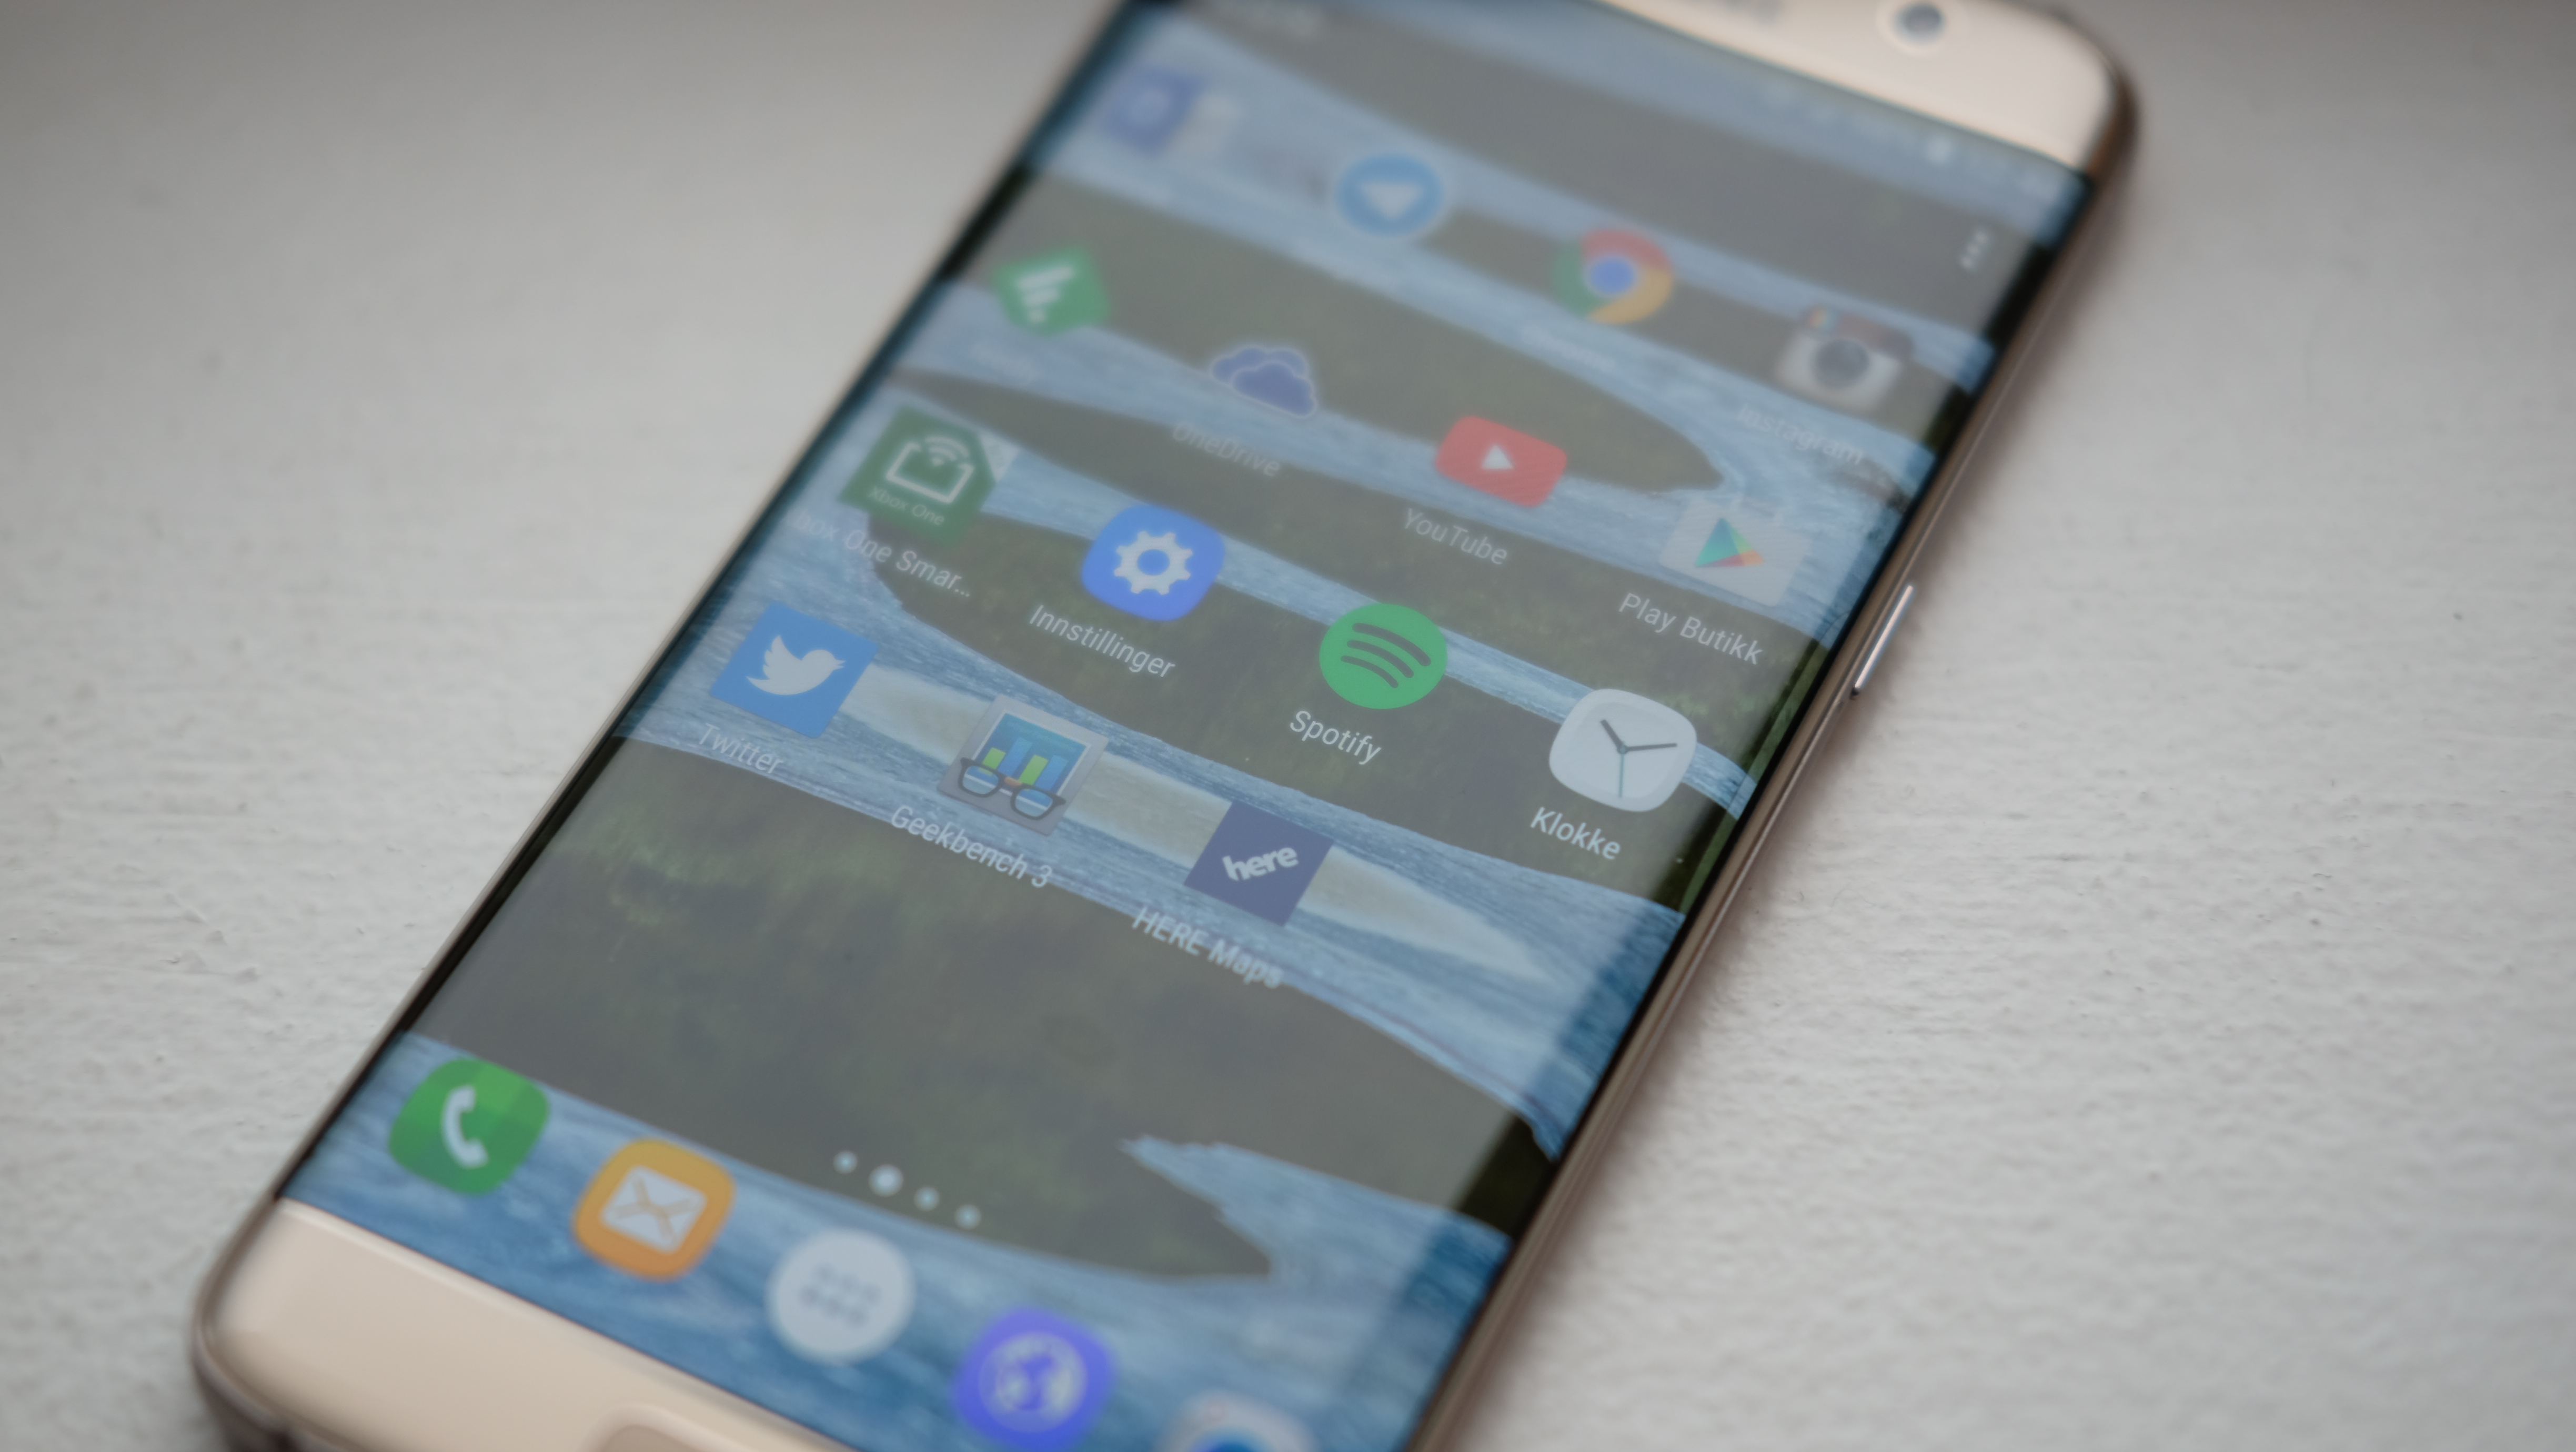 Galaxy S7-eierne i Storbritannia kan teste Android 7 allerede denne uken.